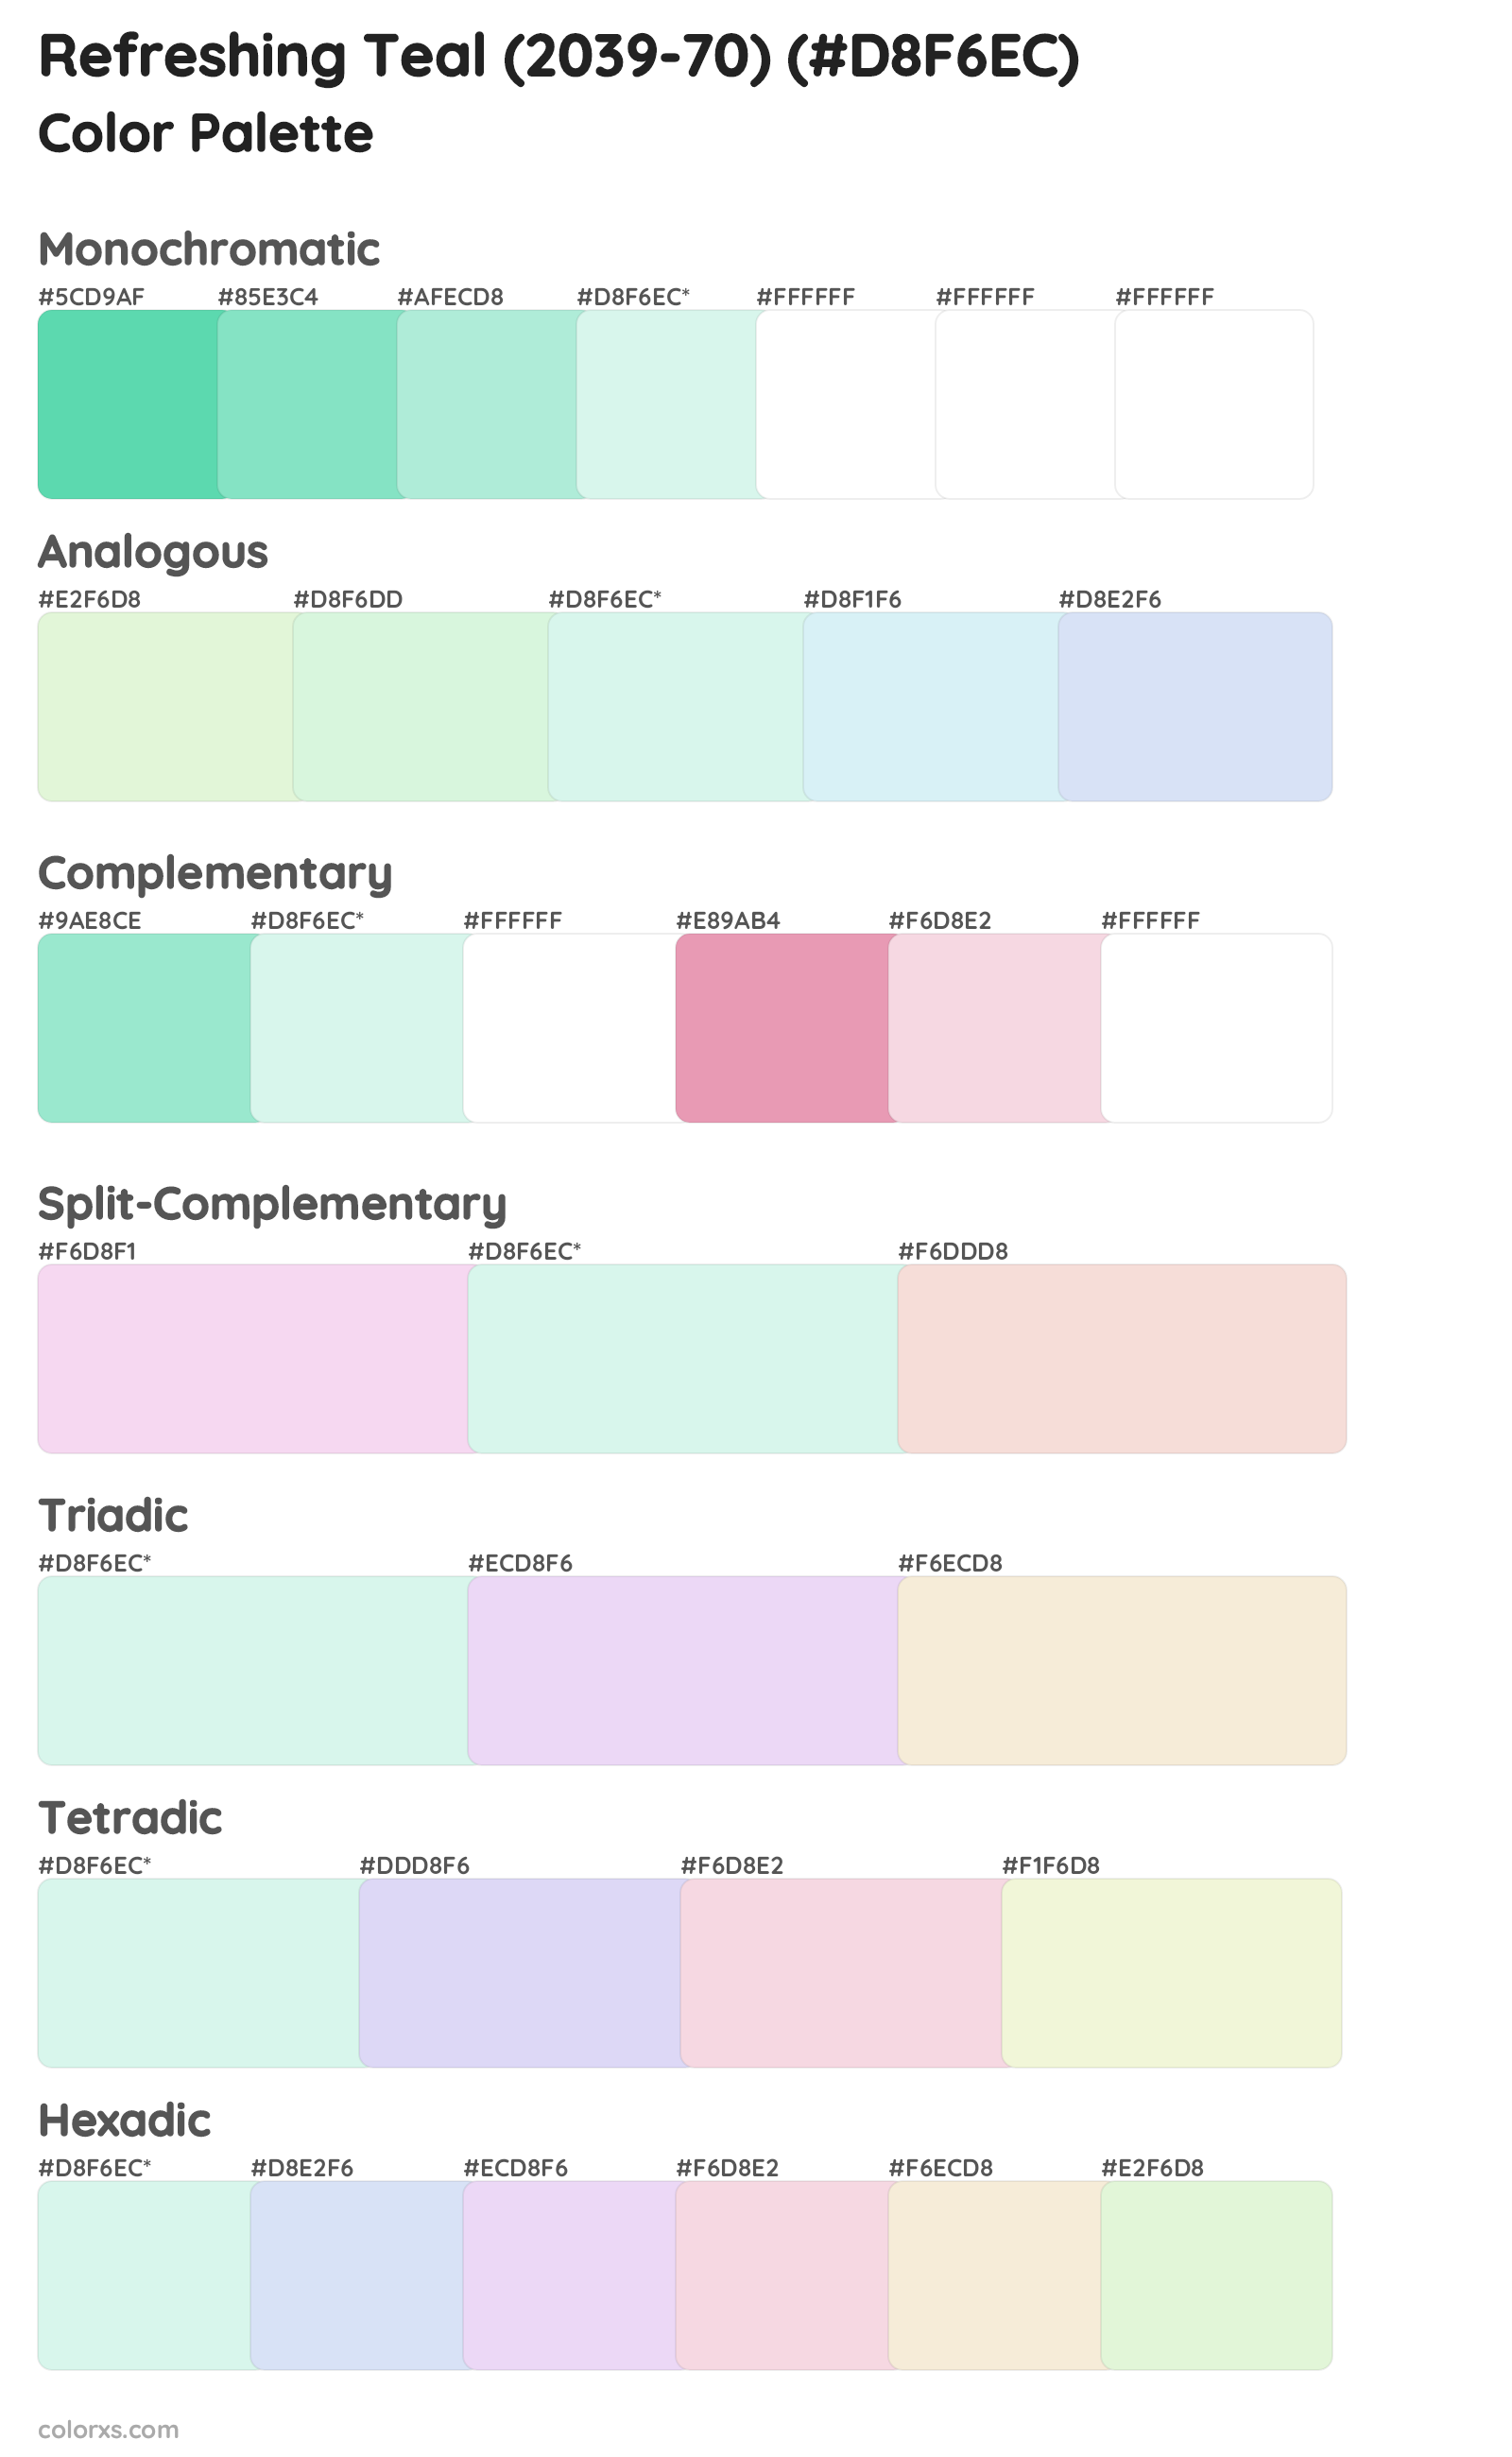 Refreshing Teal (2039-70) Color Scheme Palettes